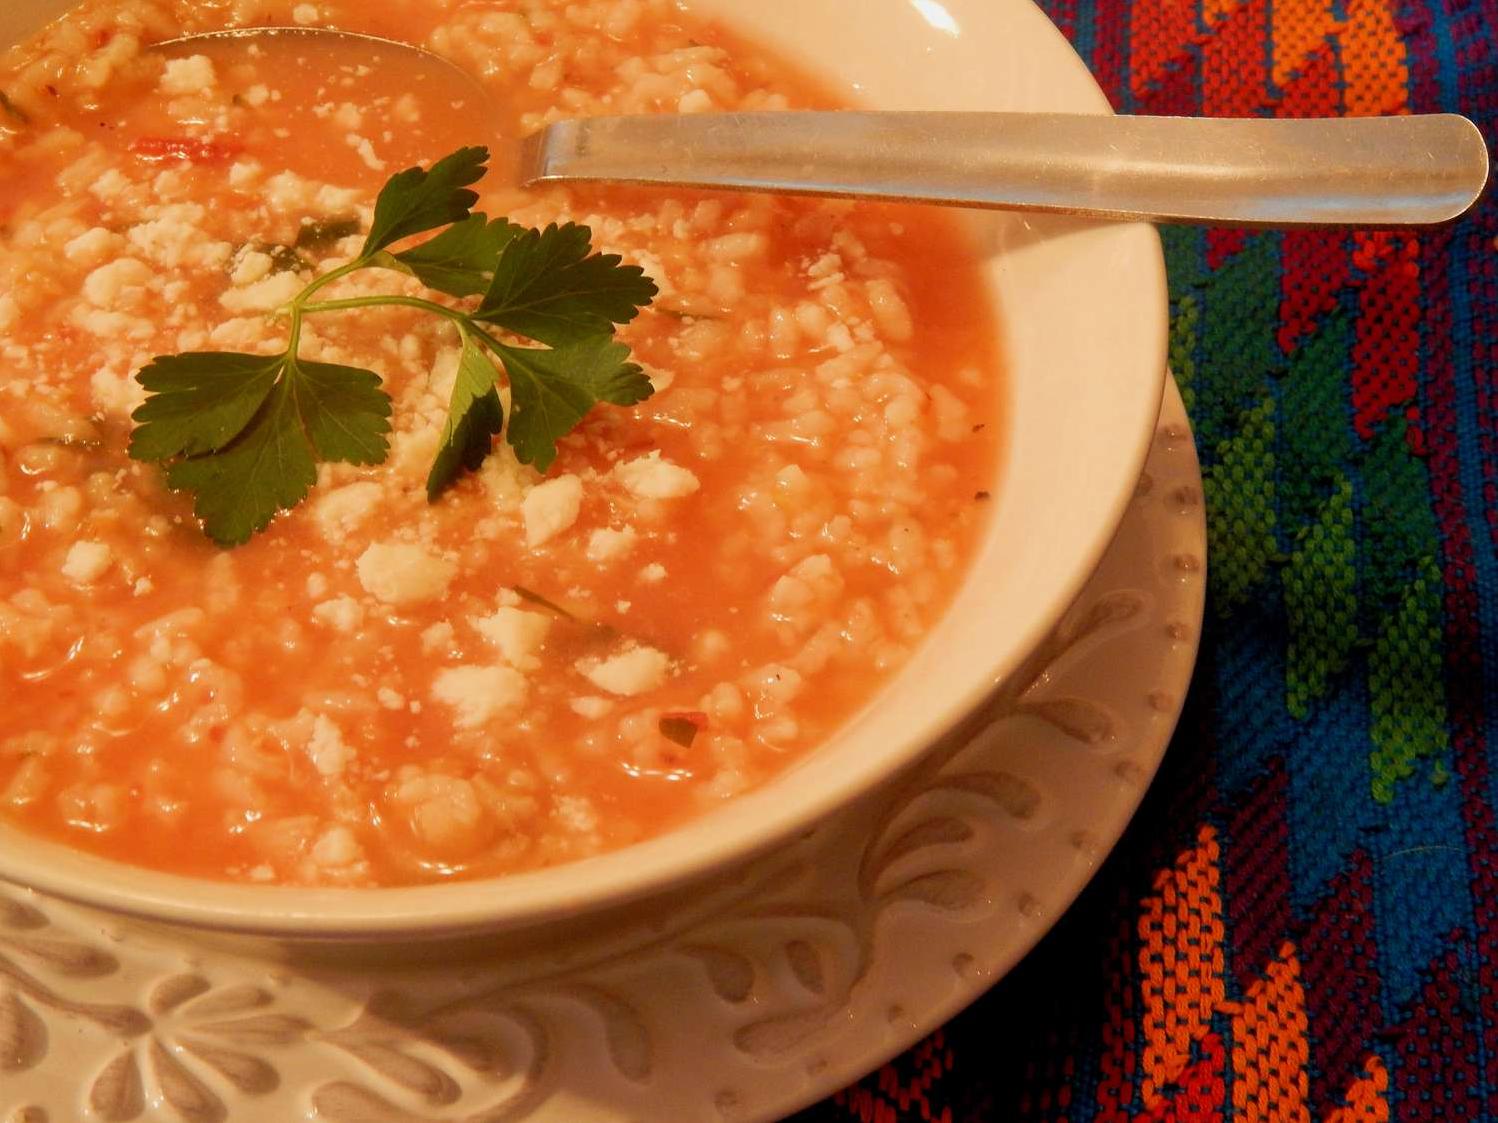 Delicious Sopa De Arroz Recipe For Your Next Meal